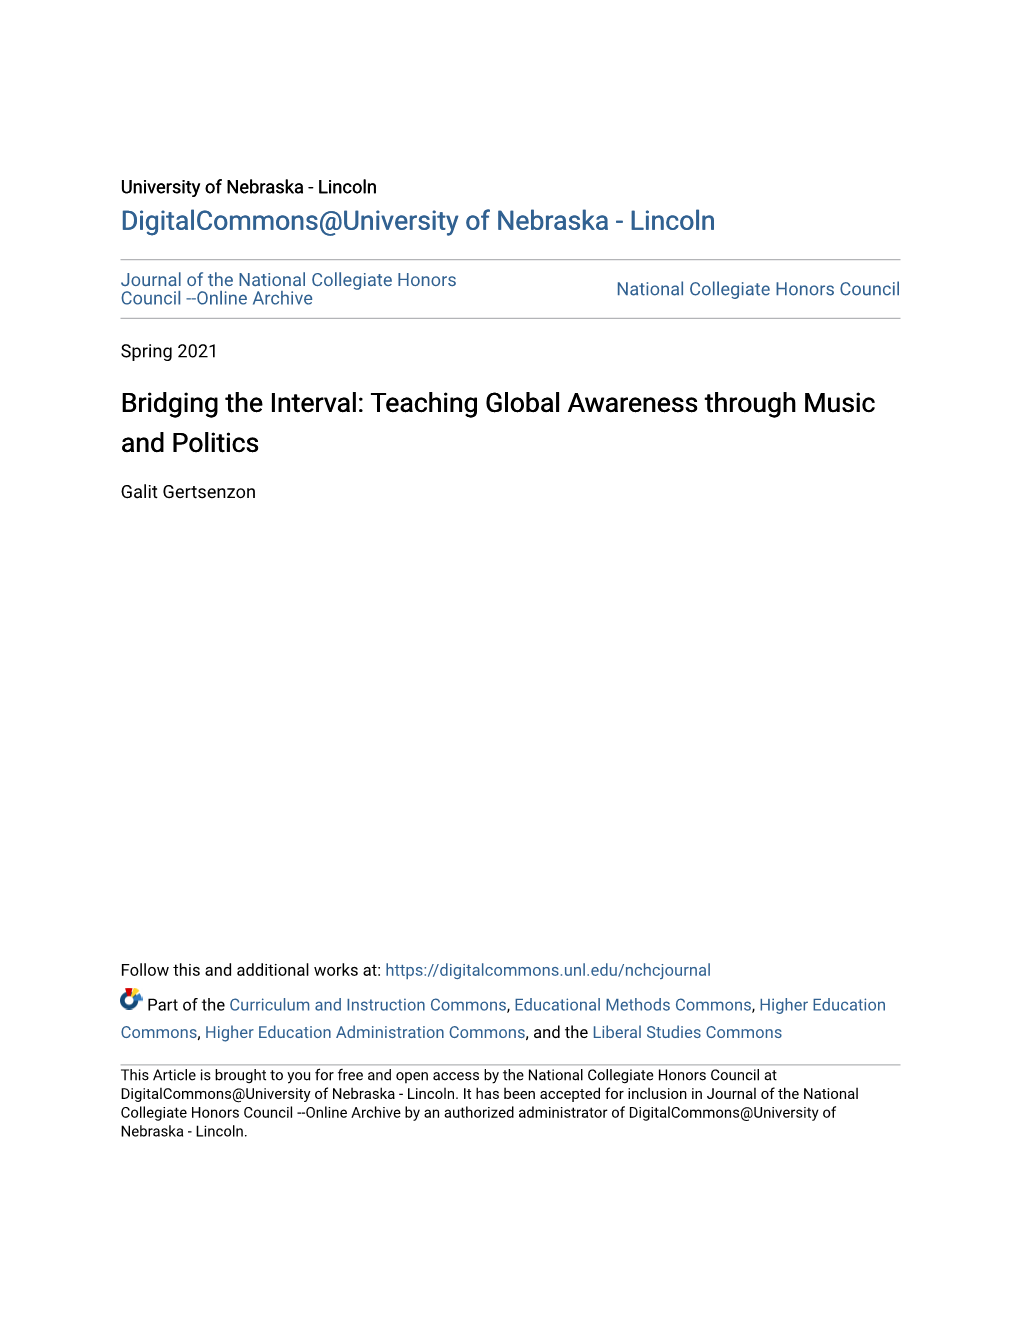 Teaching Global Awareness Through Music and Politics